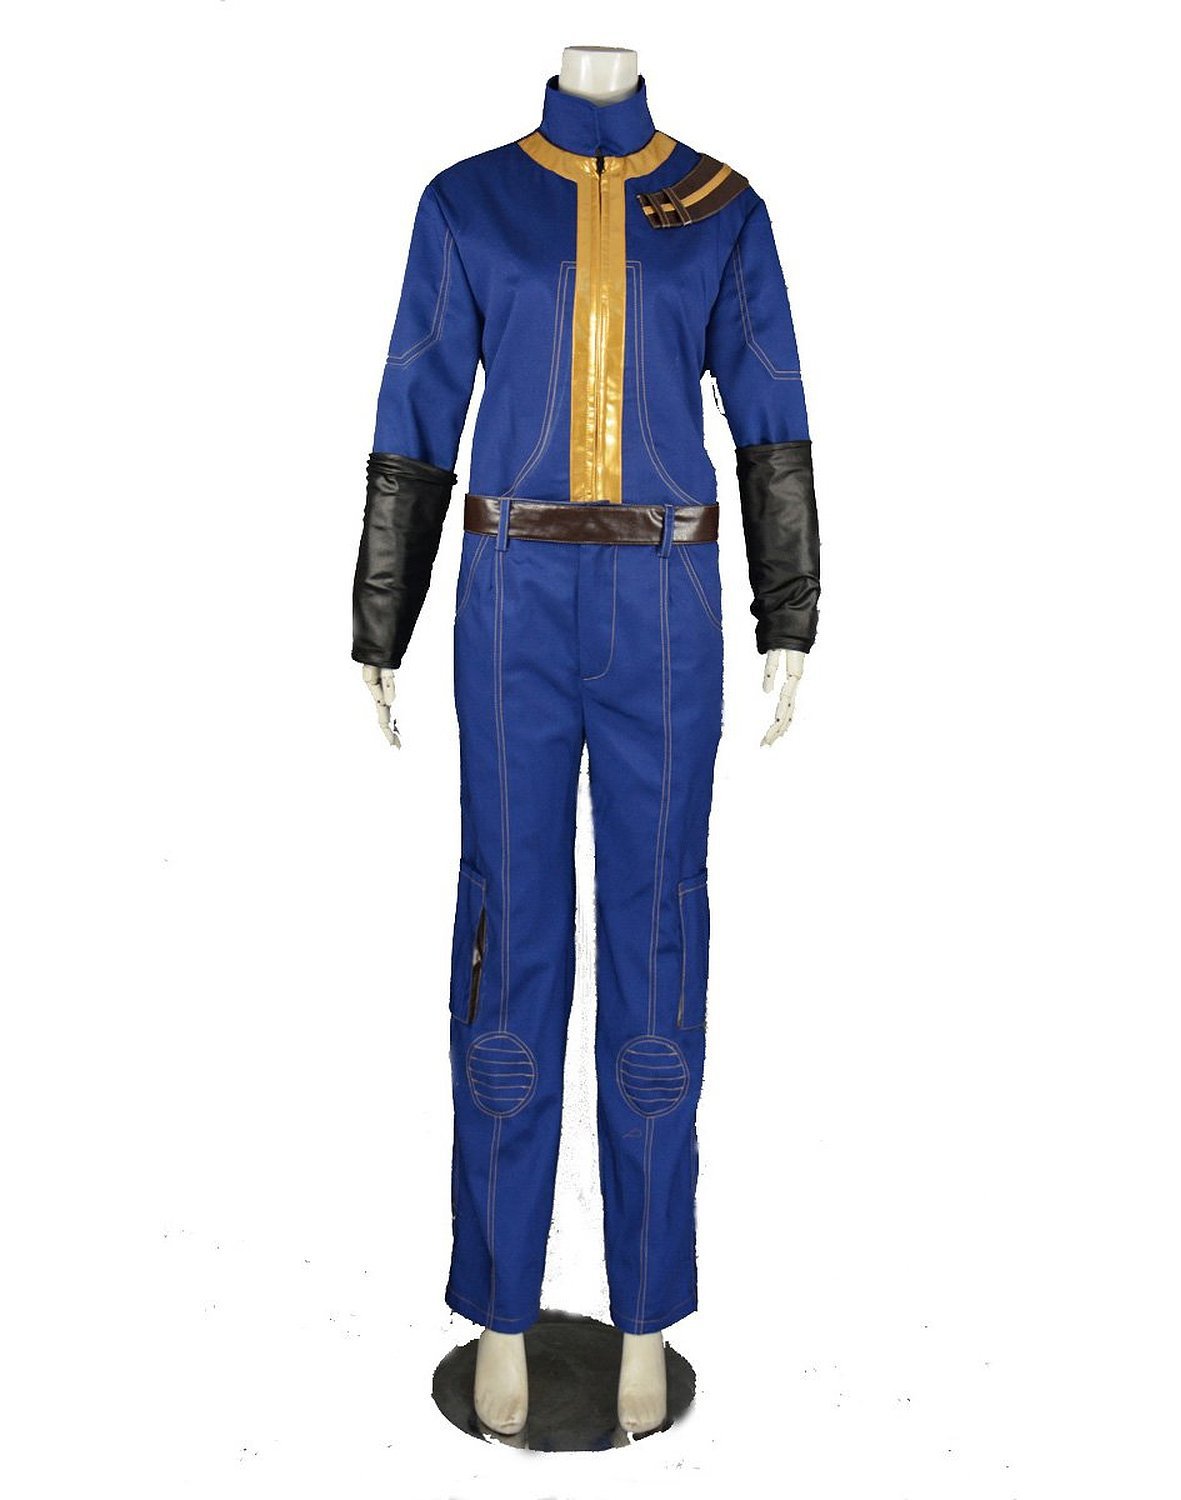 vault 101 jumpsuit costume